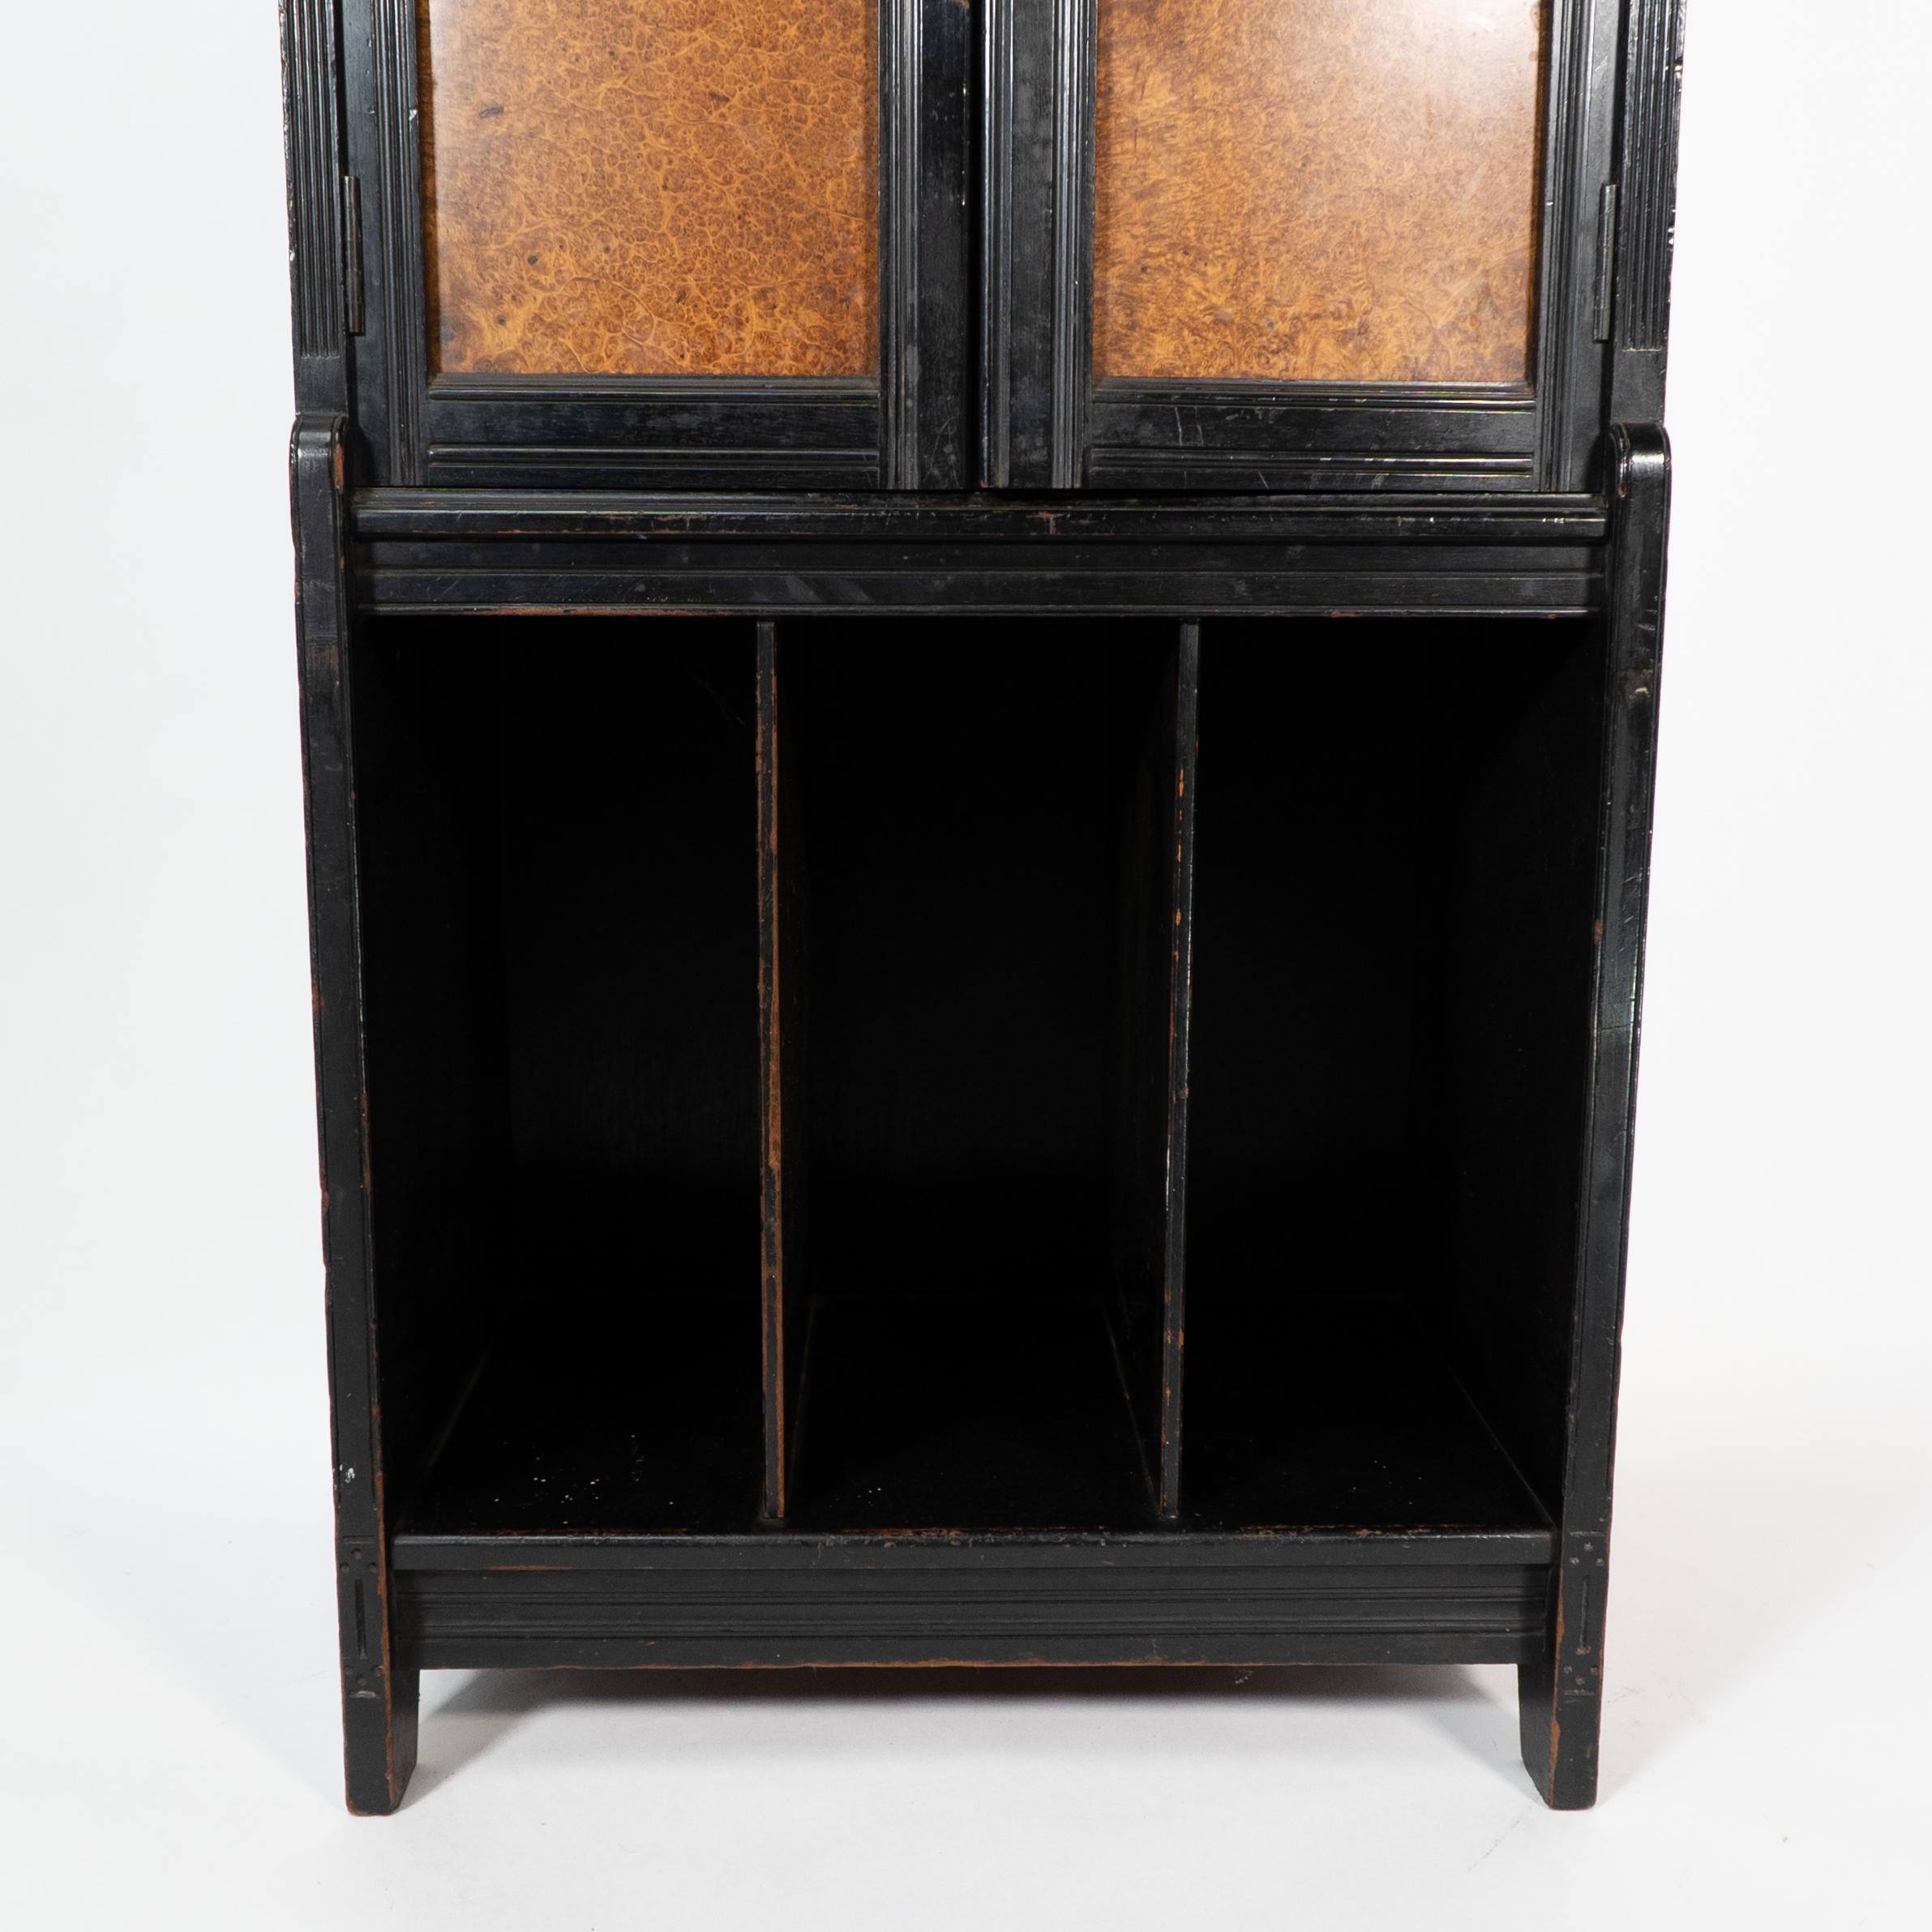 Collinson & Walton. An Aesthetic Movement burr walnut & ebonized music cabinet For Sale 7